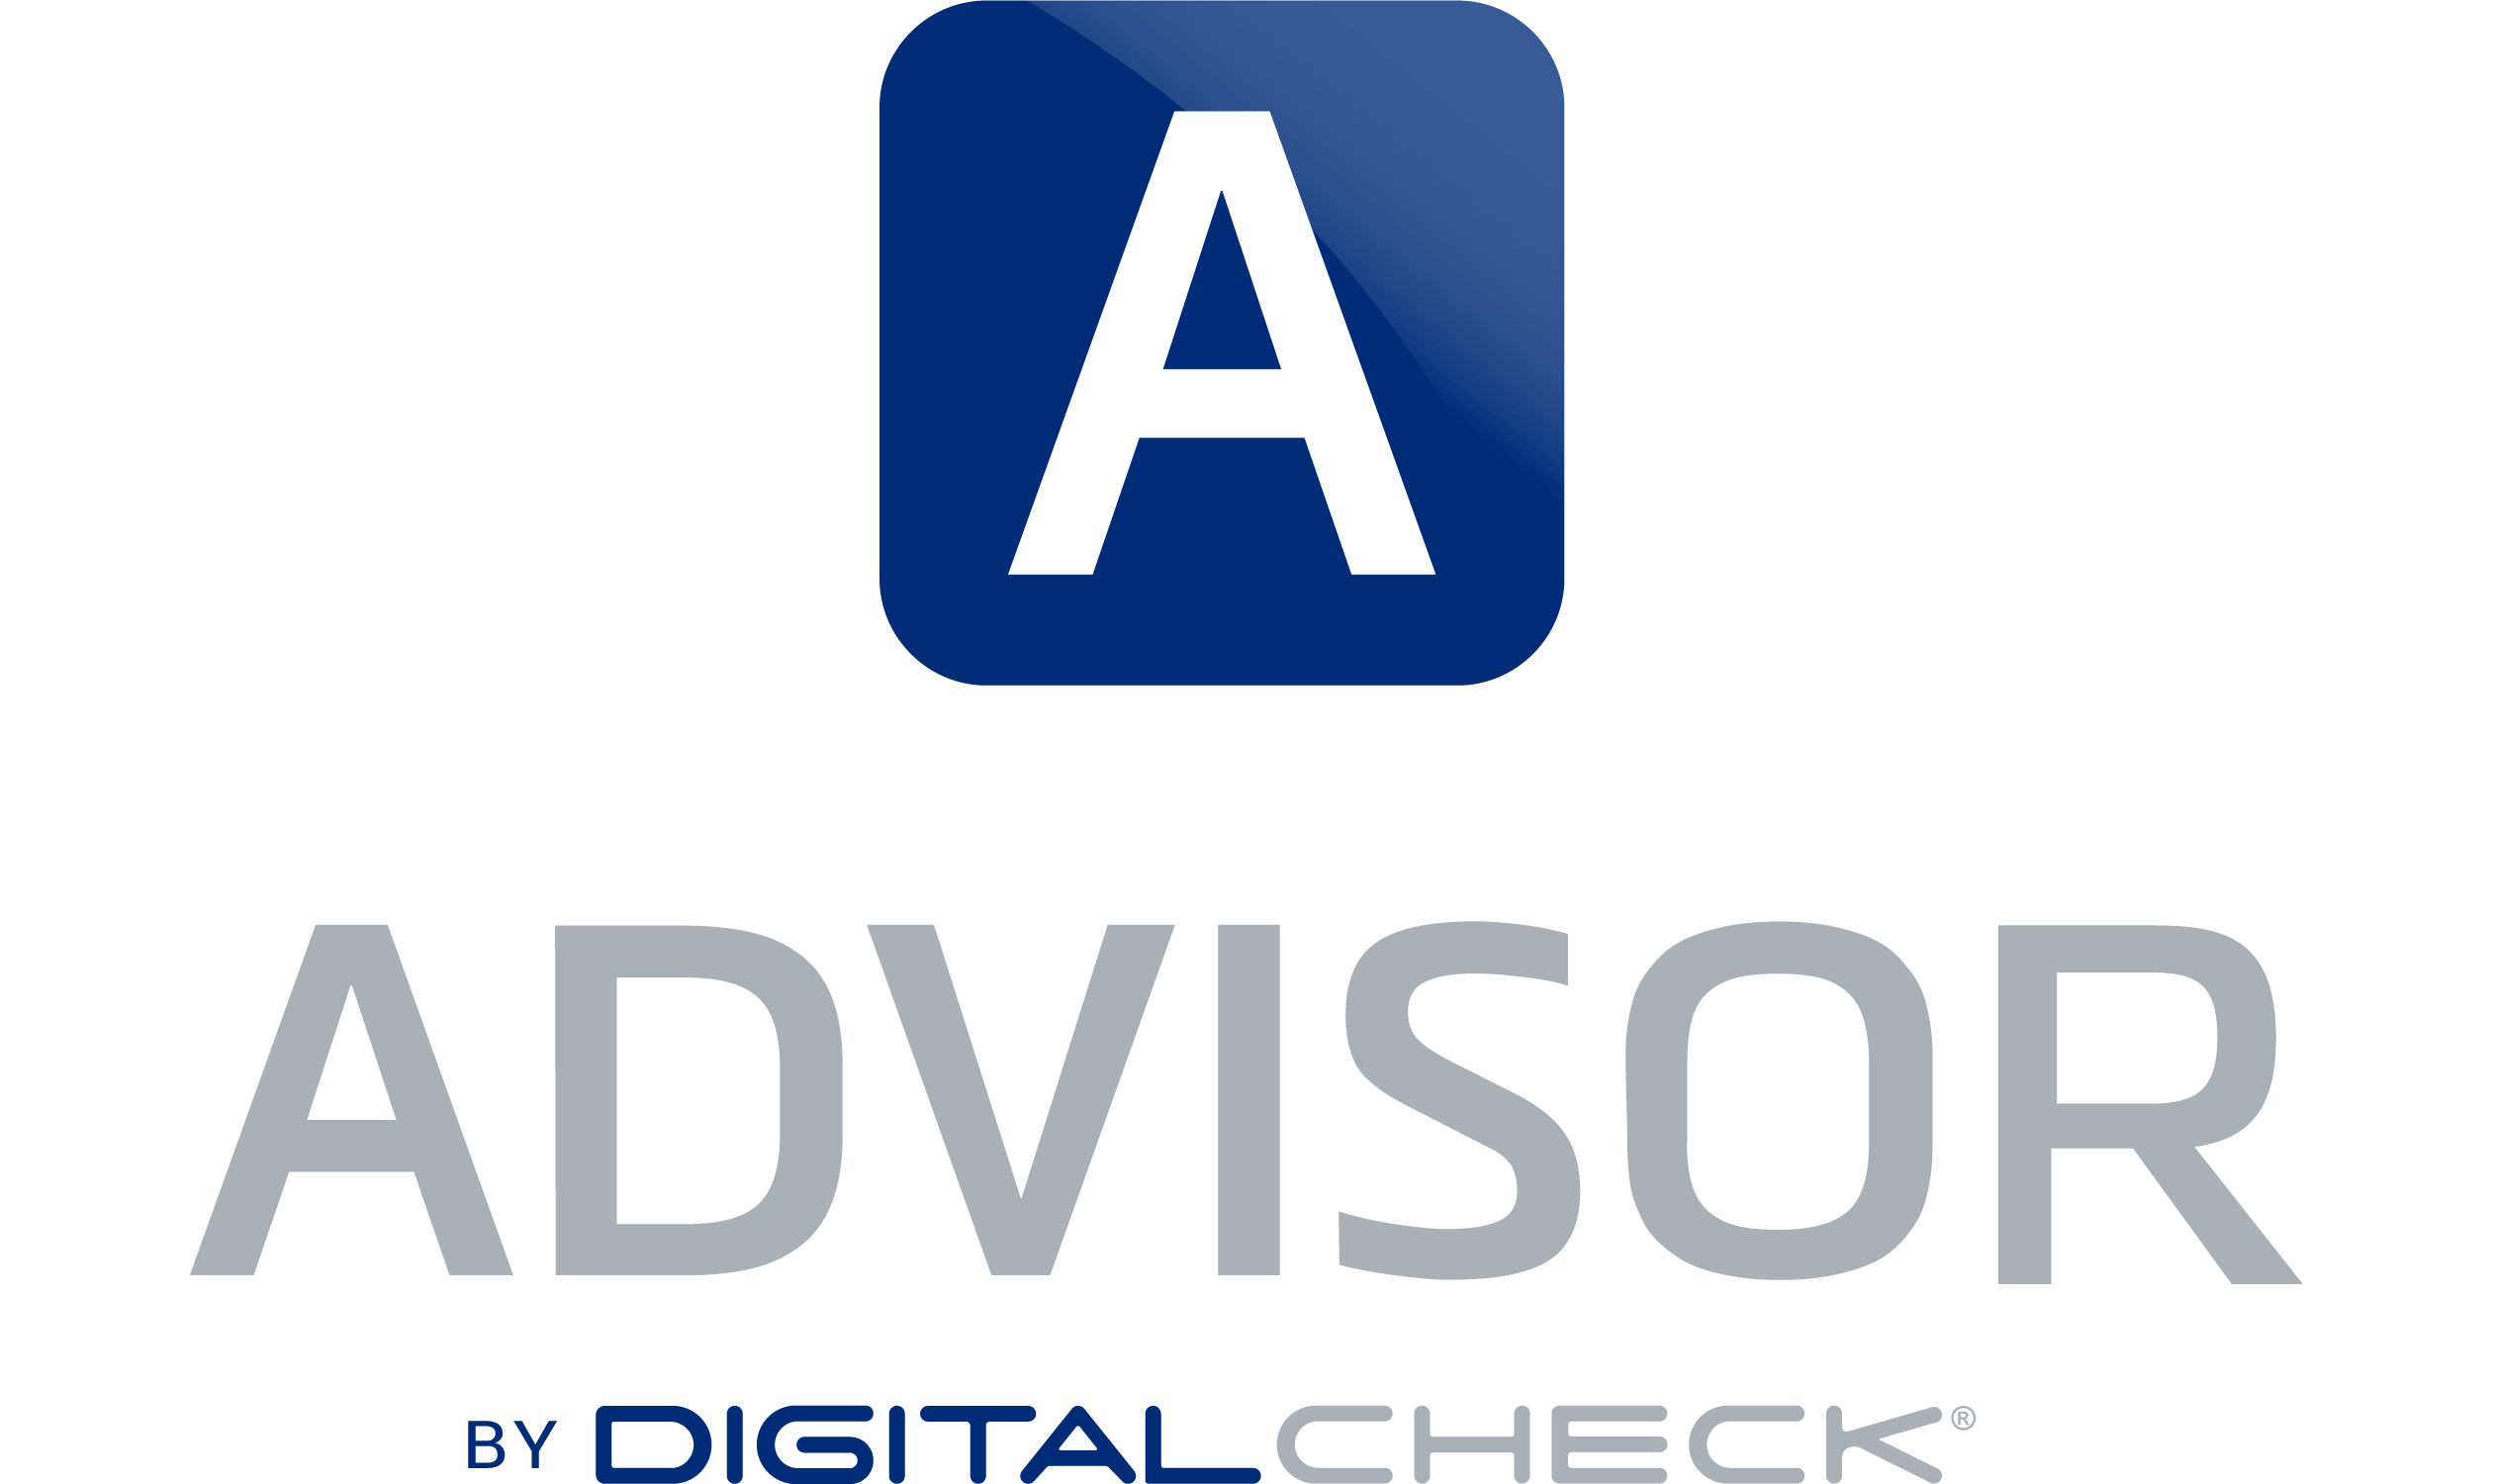 Advisor Logo - advisor logo draft 092915 - Digital Check : Digital Check